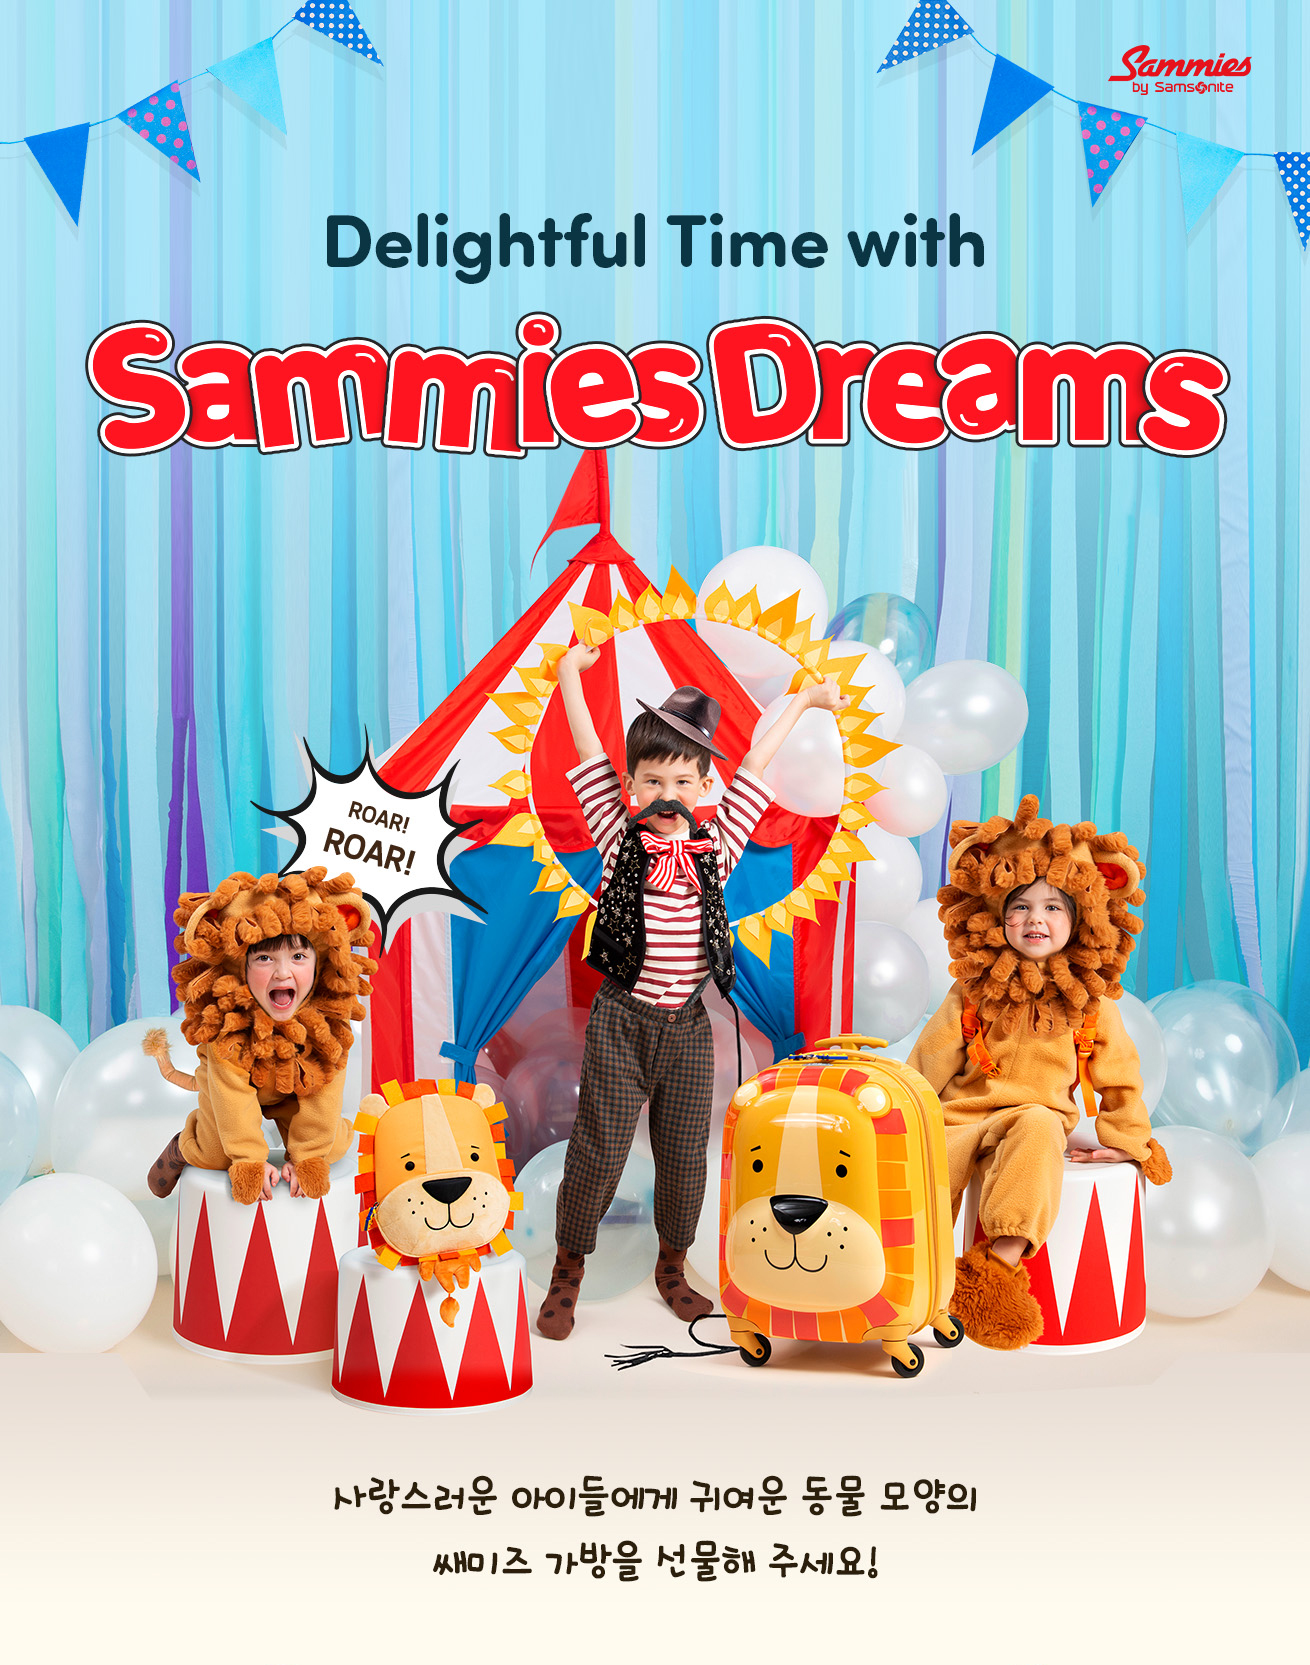 Delightful Time with sammies Dreams 사랑스러운 아이들에게 귀여운 동물 모양의 쌔미즈 가방을 선물해 주세요!